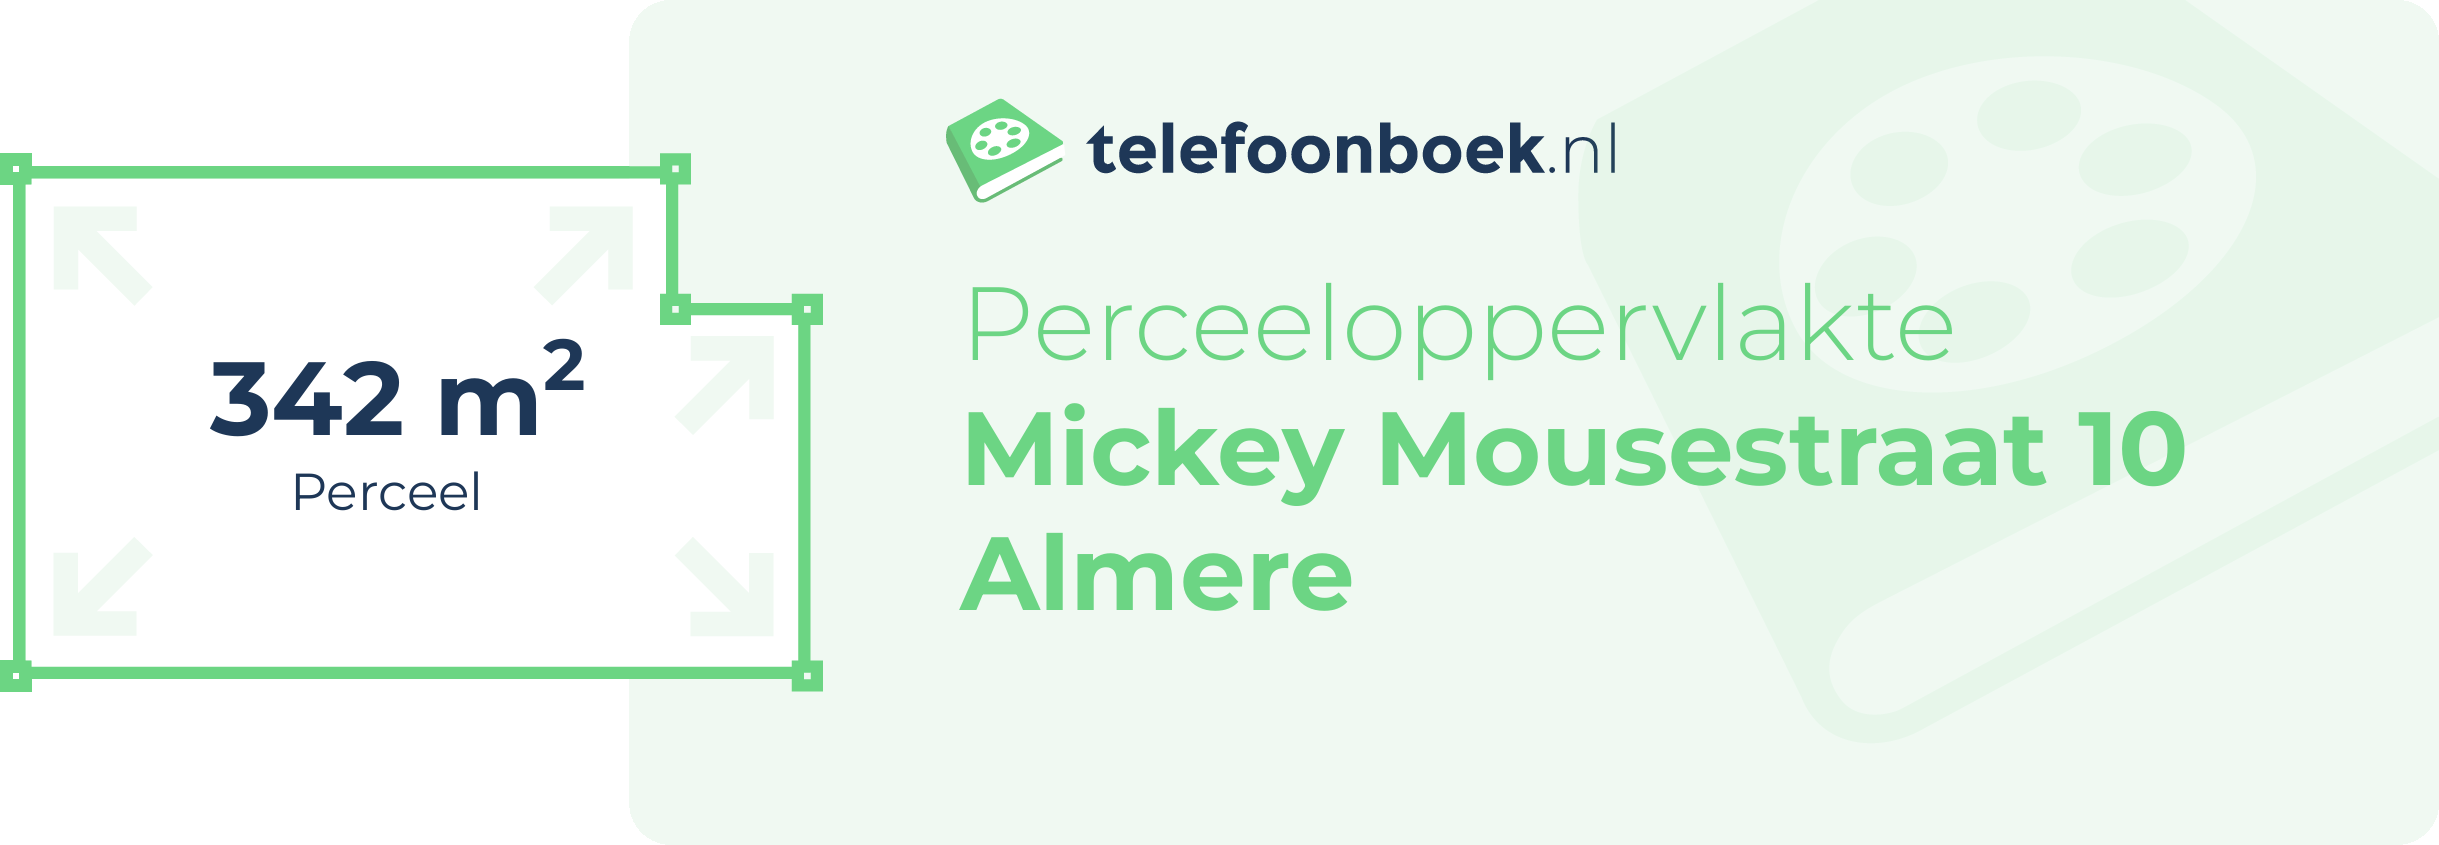 Perceeloppervlakte Mickey Mousestraat 10 Almere